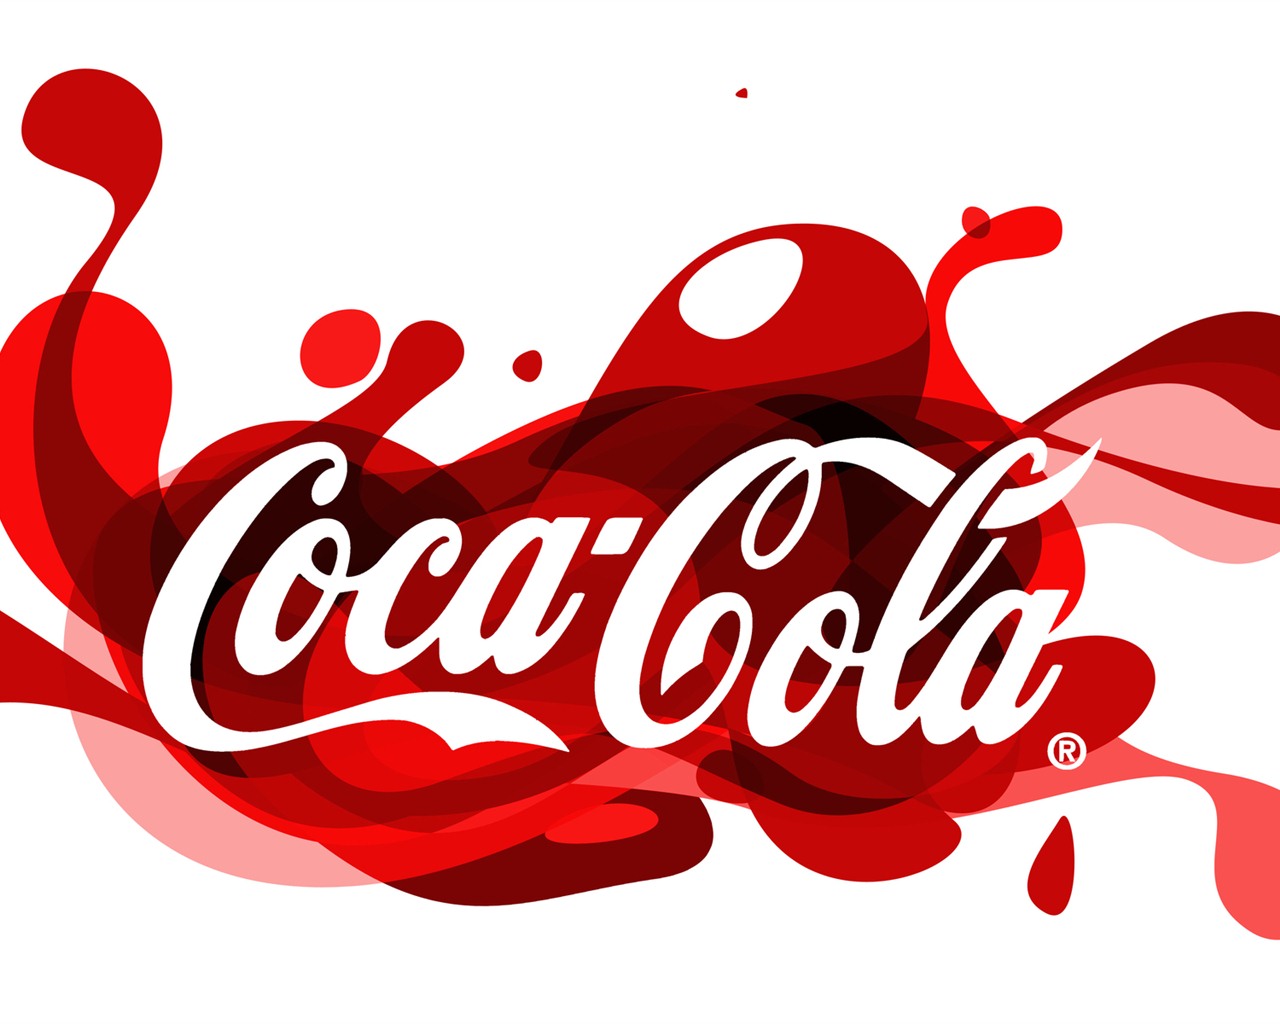 Coca-Cola 可口可乐精美广告壁纸12 - 1280x1024